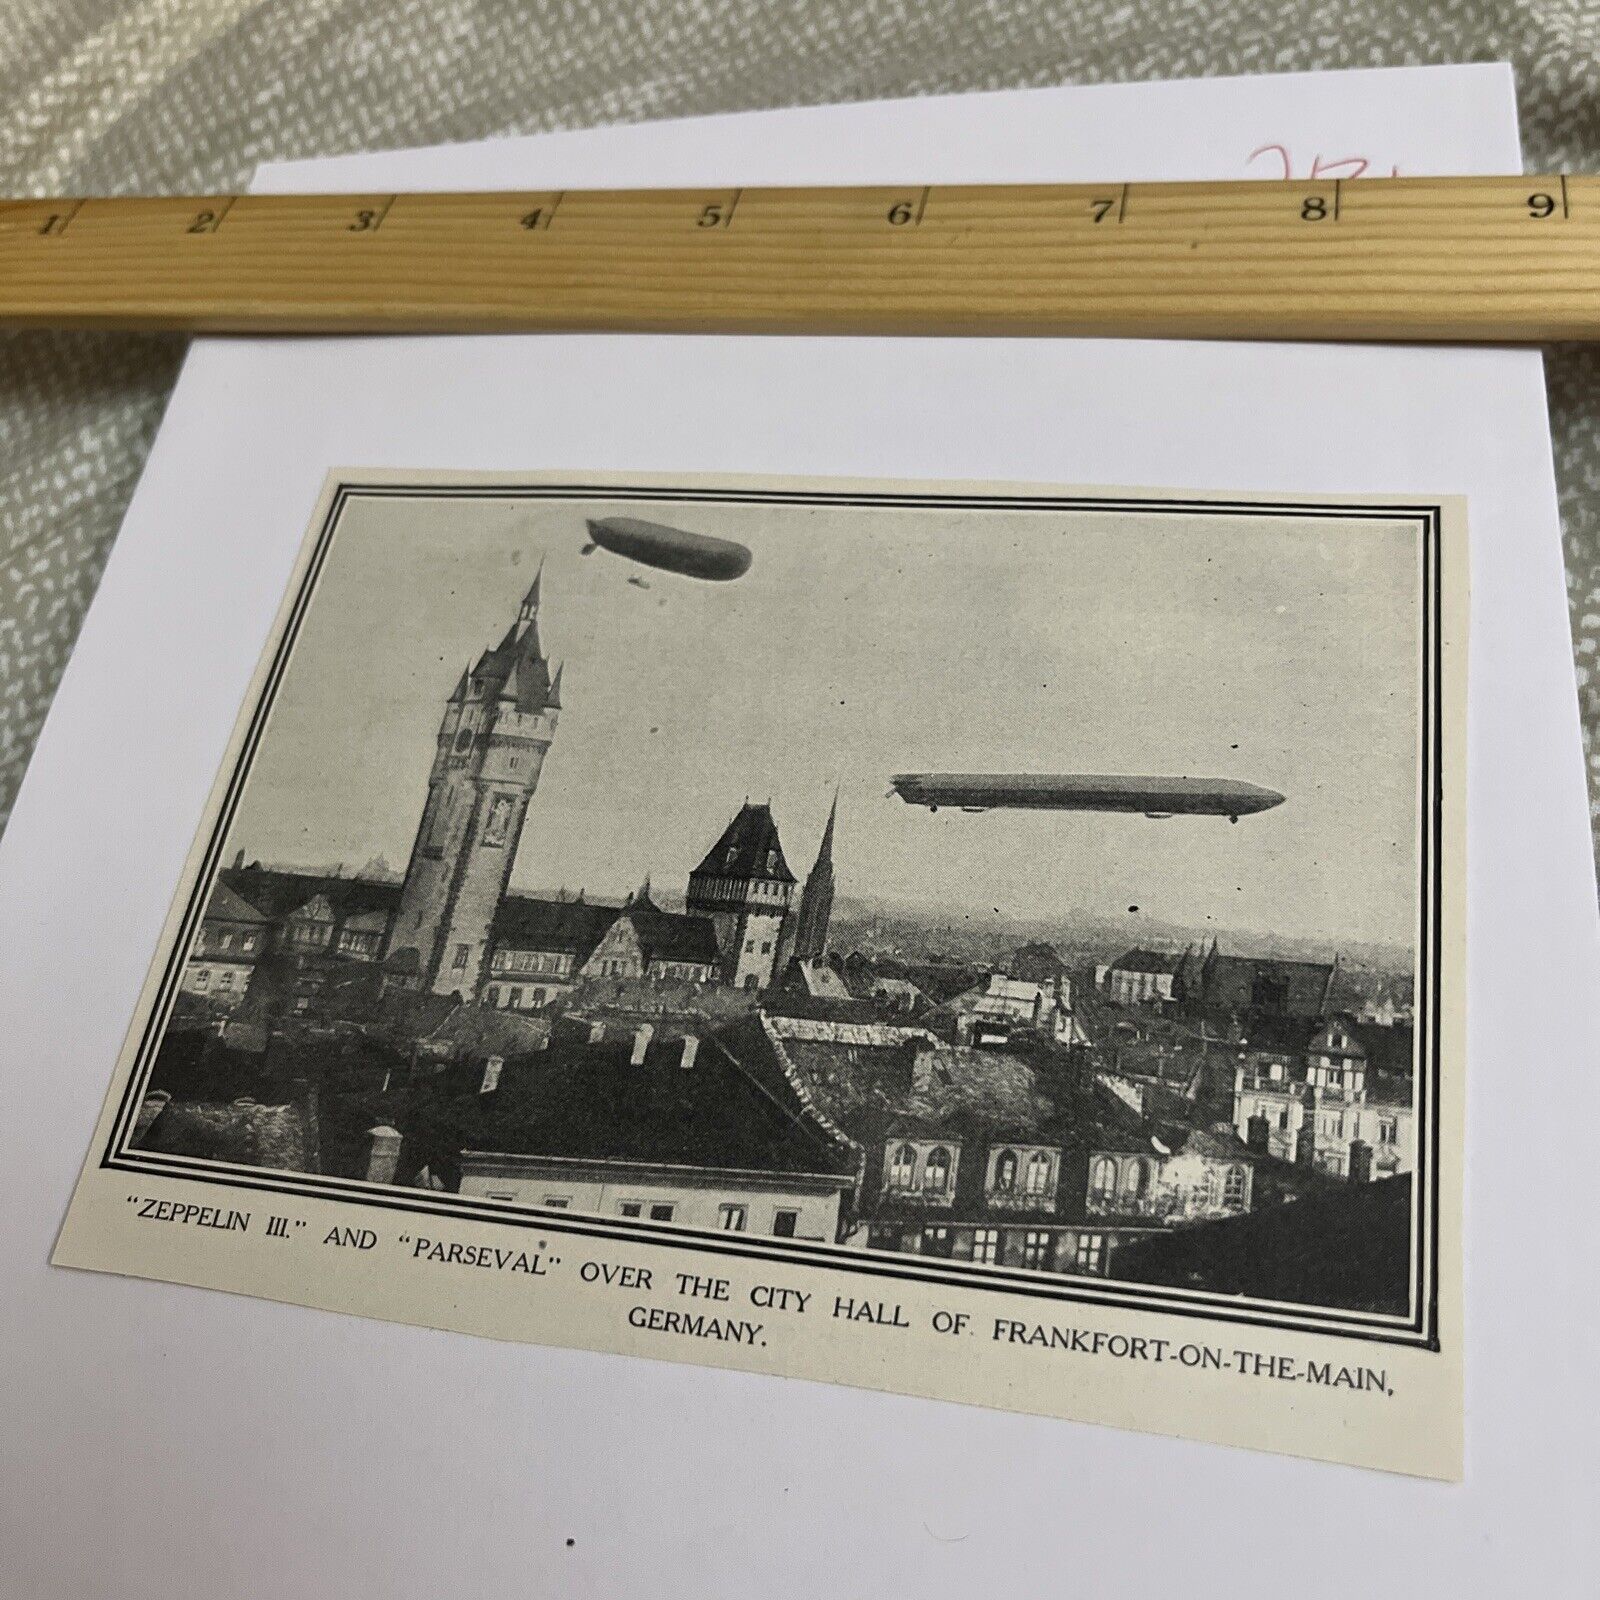 Antique 1909 Image: Zeppelin III & Parseval over City Hall in Frankfurt Germany